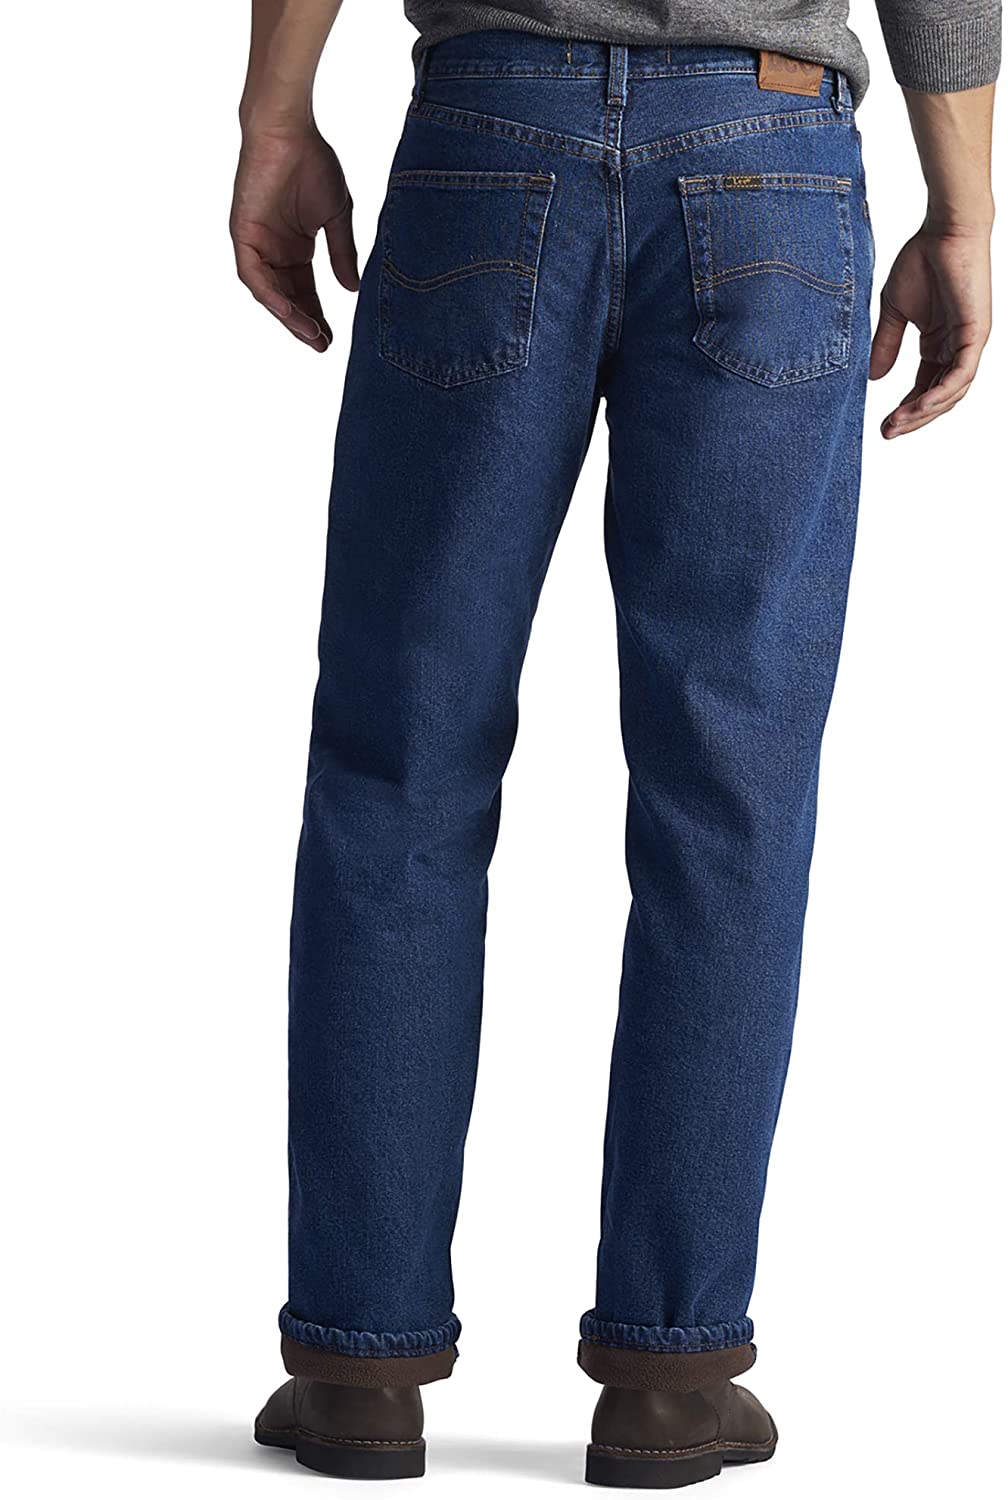 Lee Lined Men's Fleece Flannel Relaxed-Fit Straight-Leg Jeans Pants 